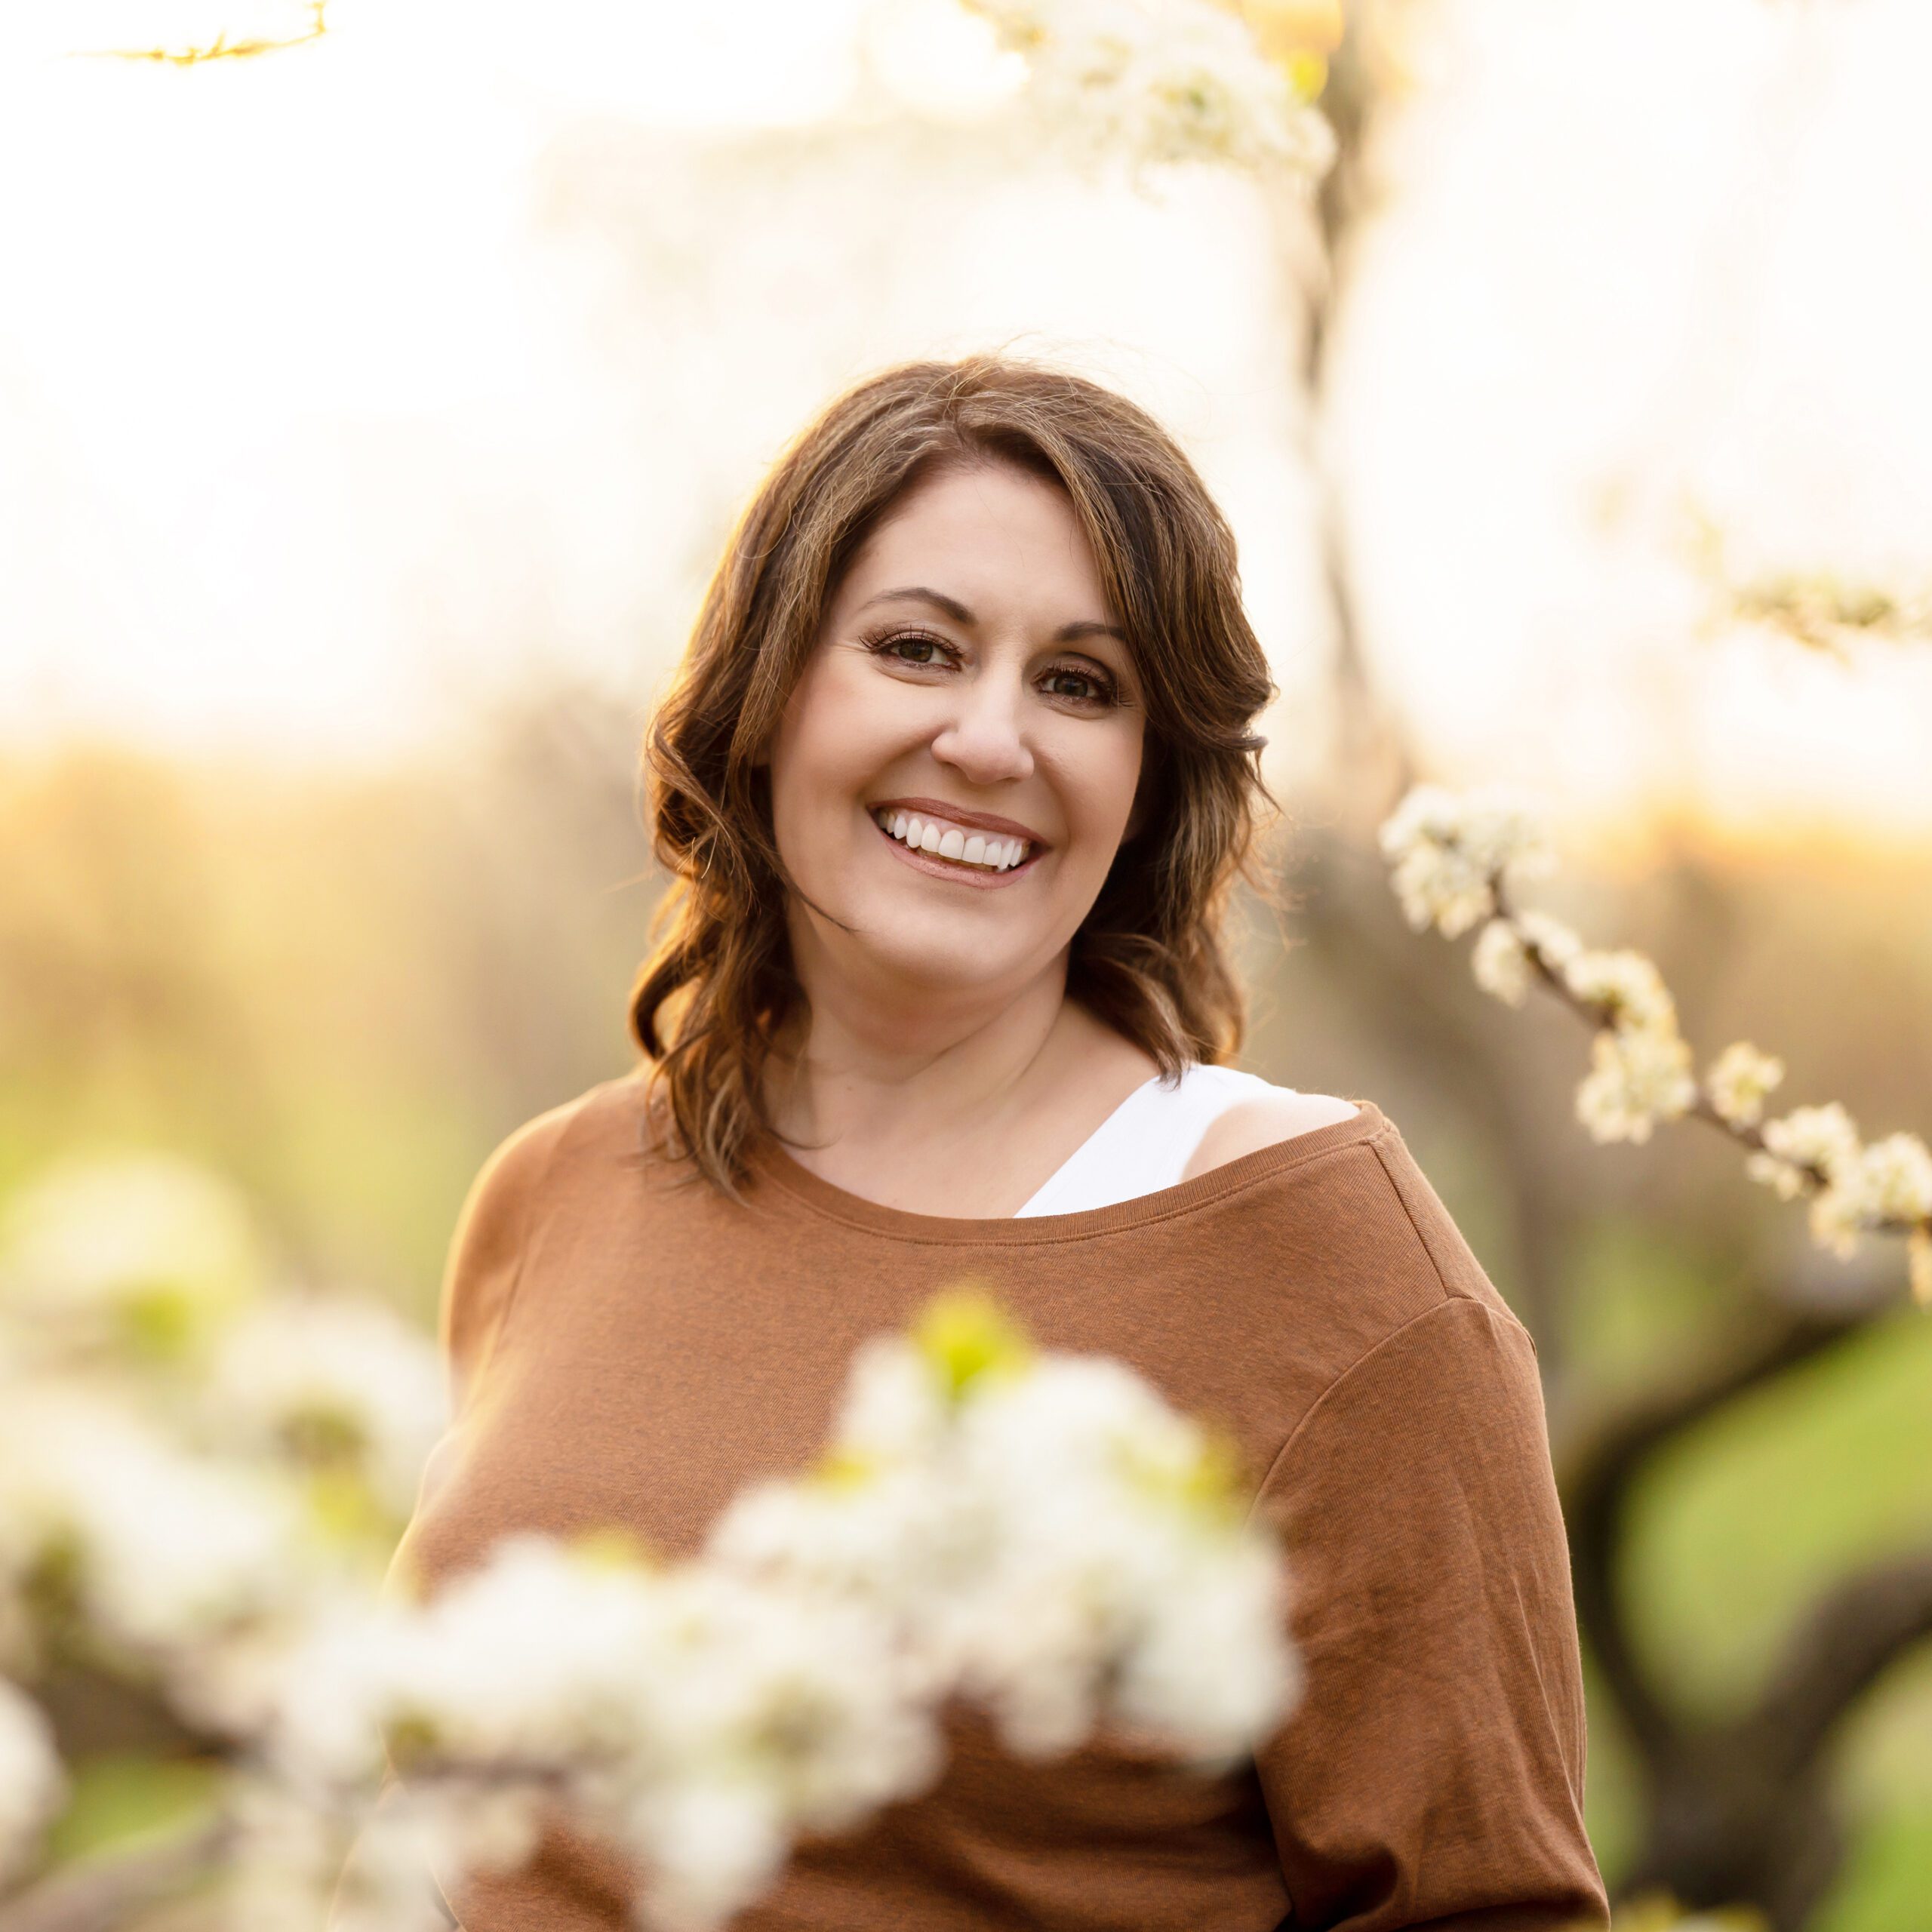 Amanda Gibson Toronto Newborn Photographer in gold shirt in the Cherry Blossoms Smiling.